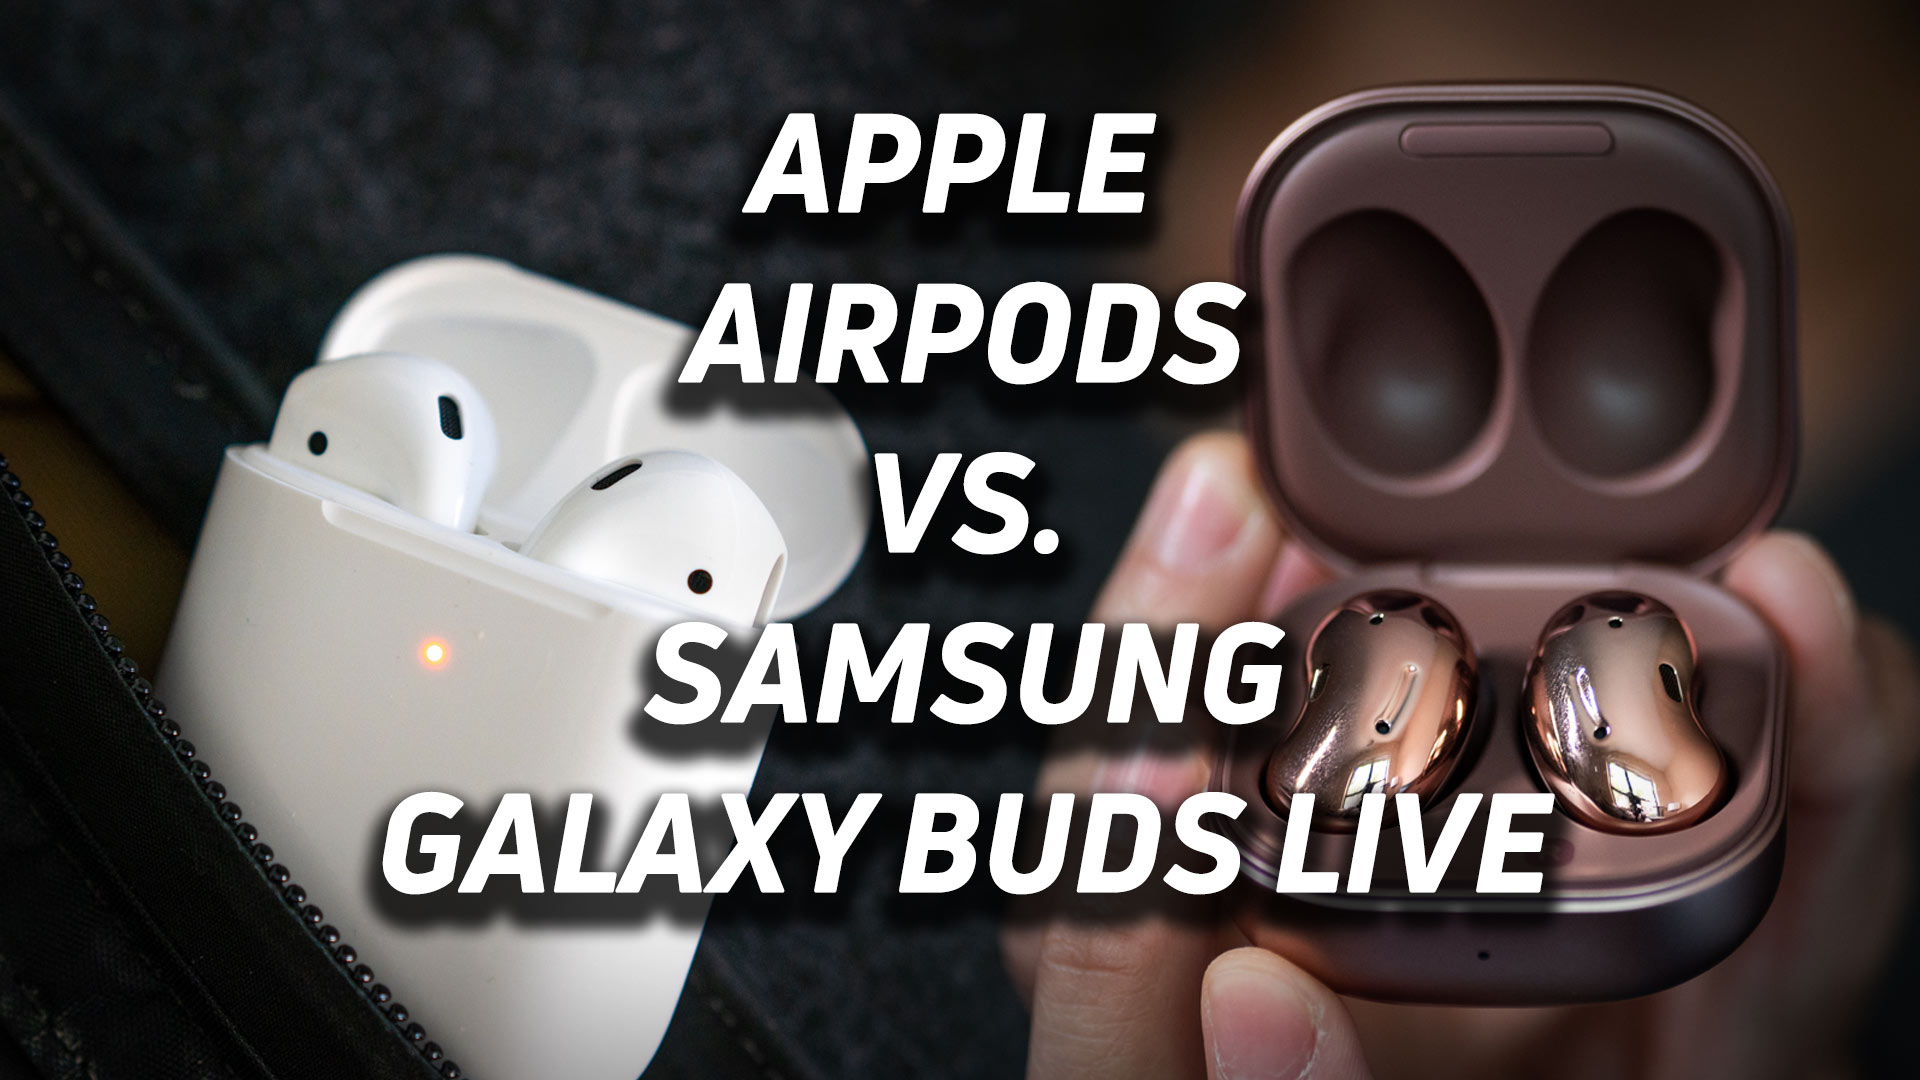 Samsung Galaxy Buds Plus vs. Samsung Galaxy Buds - SoundGuys